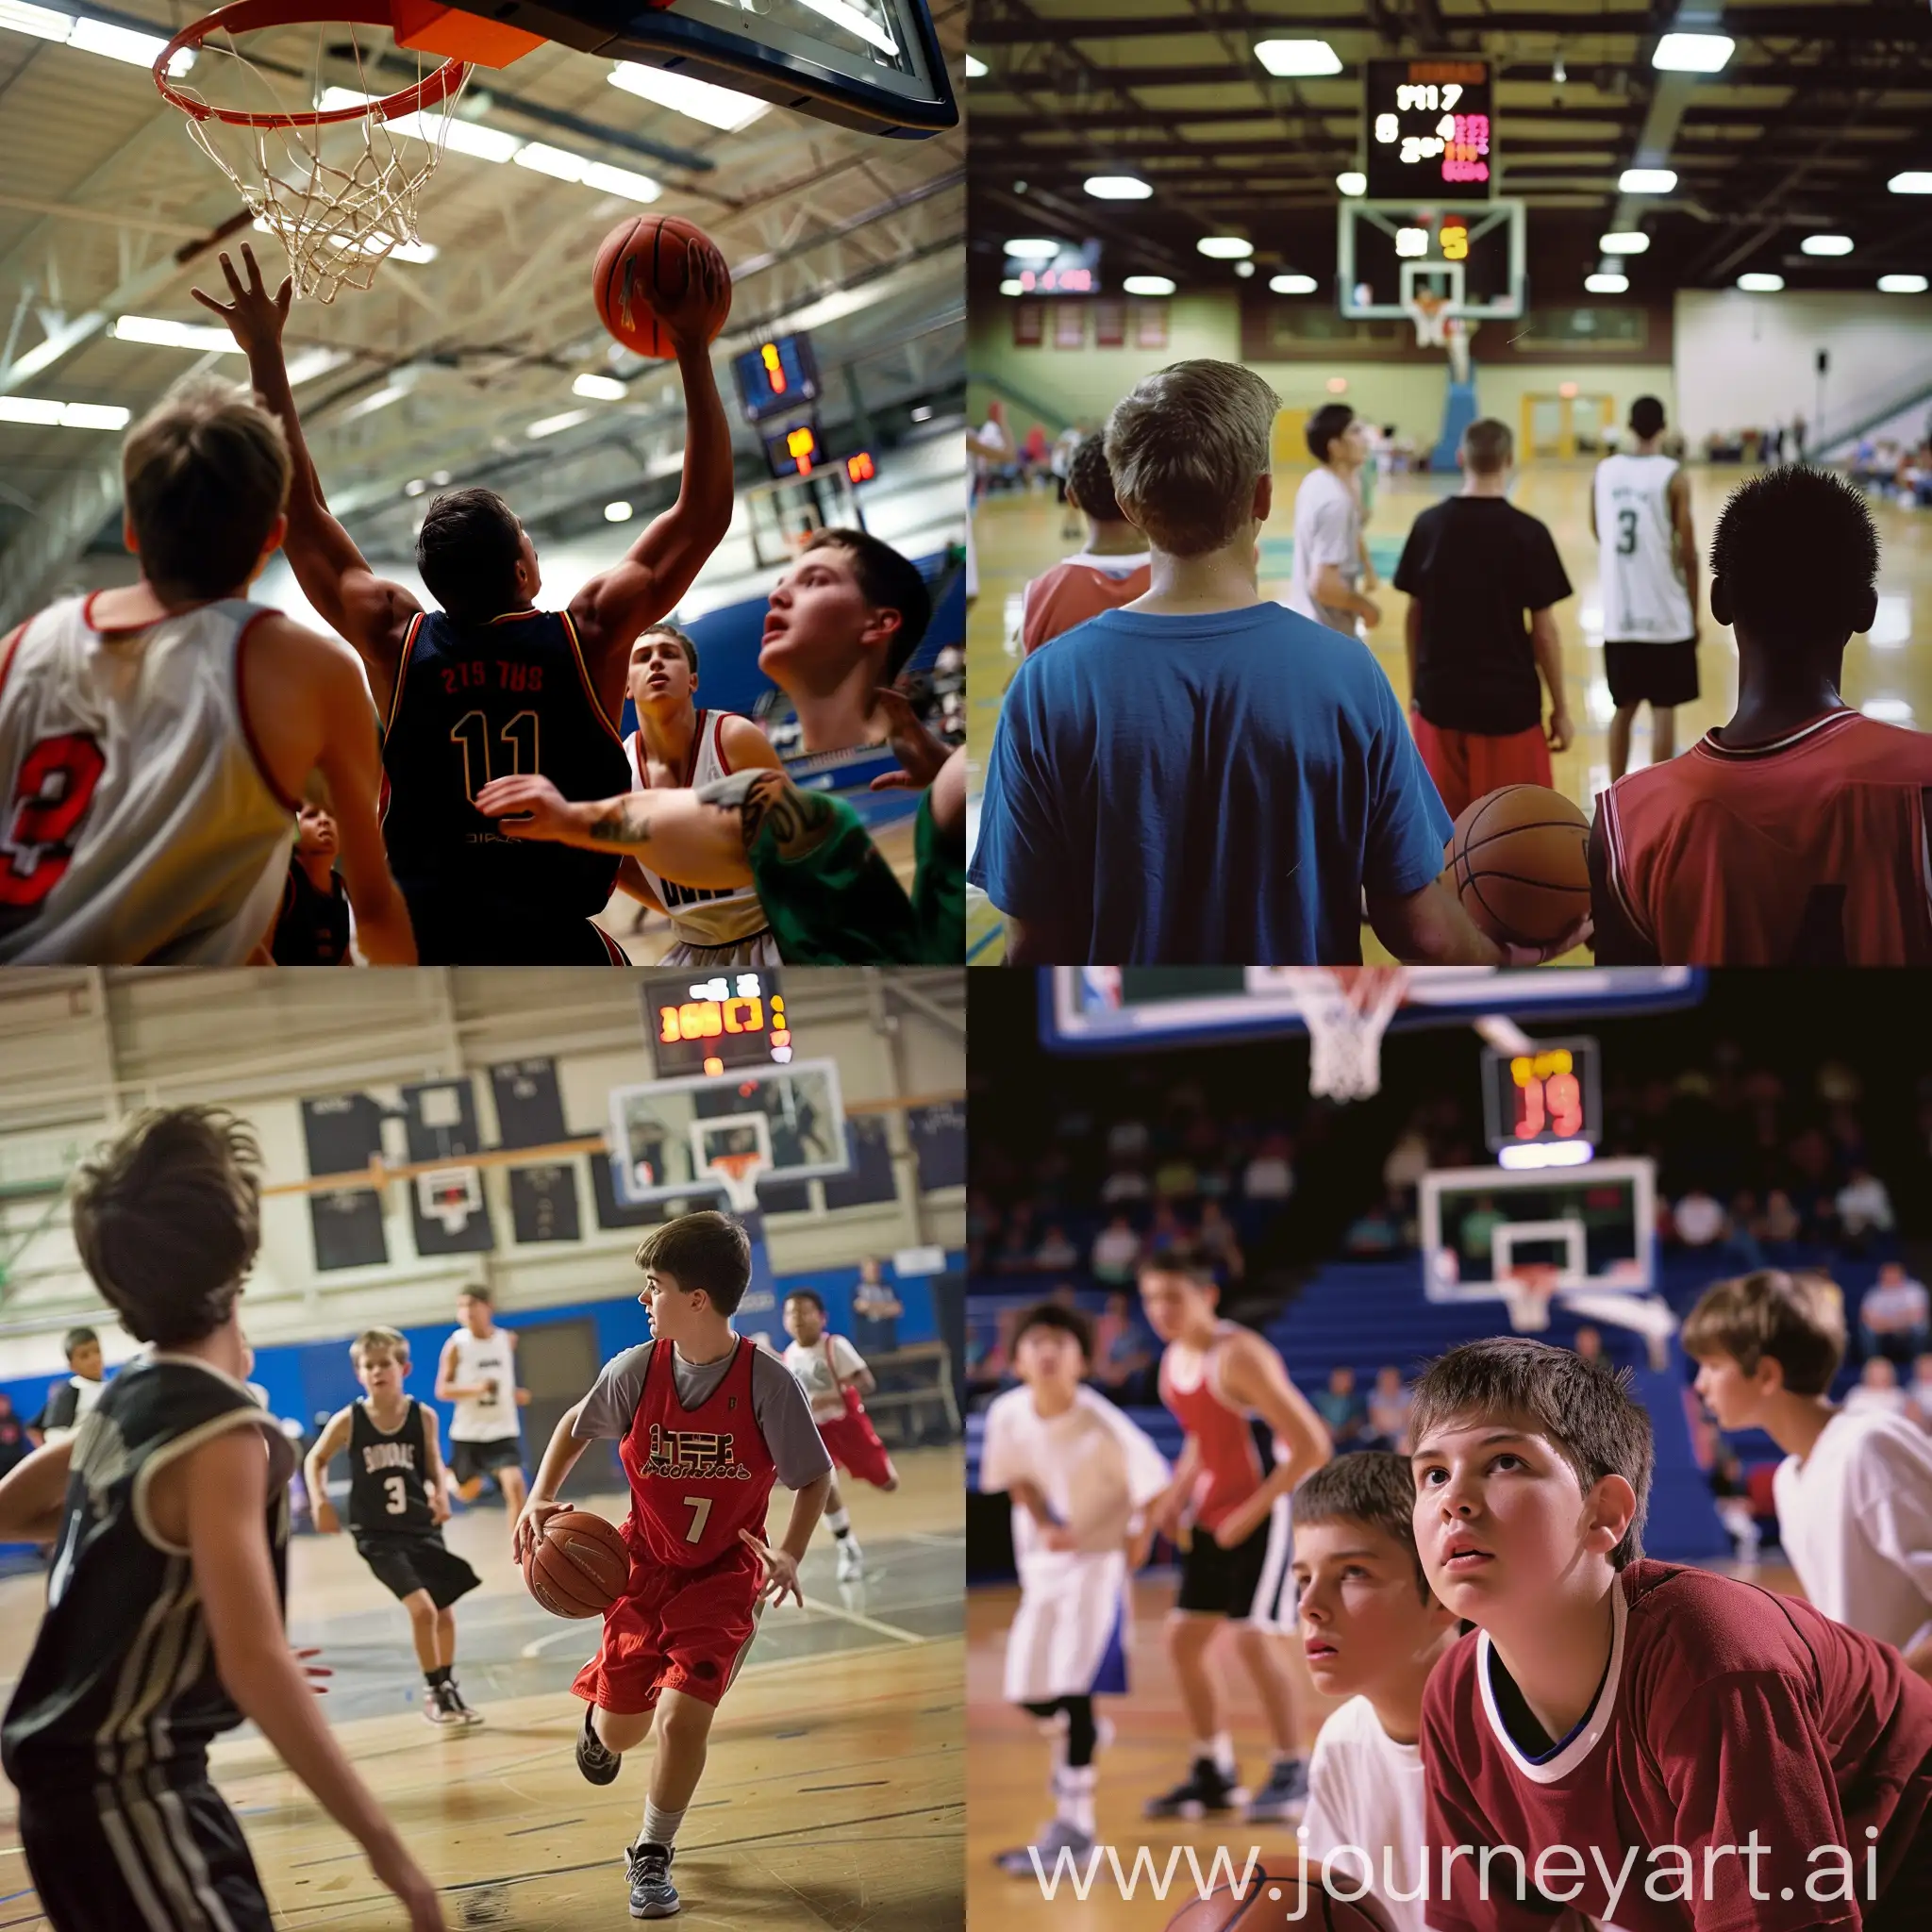 Teenage-Basketball-Game-with-Scoreboard-Action